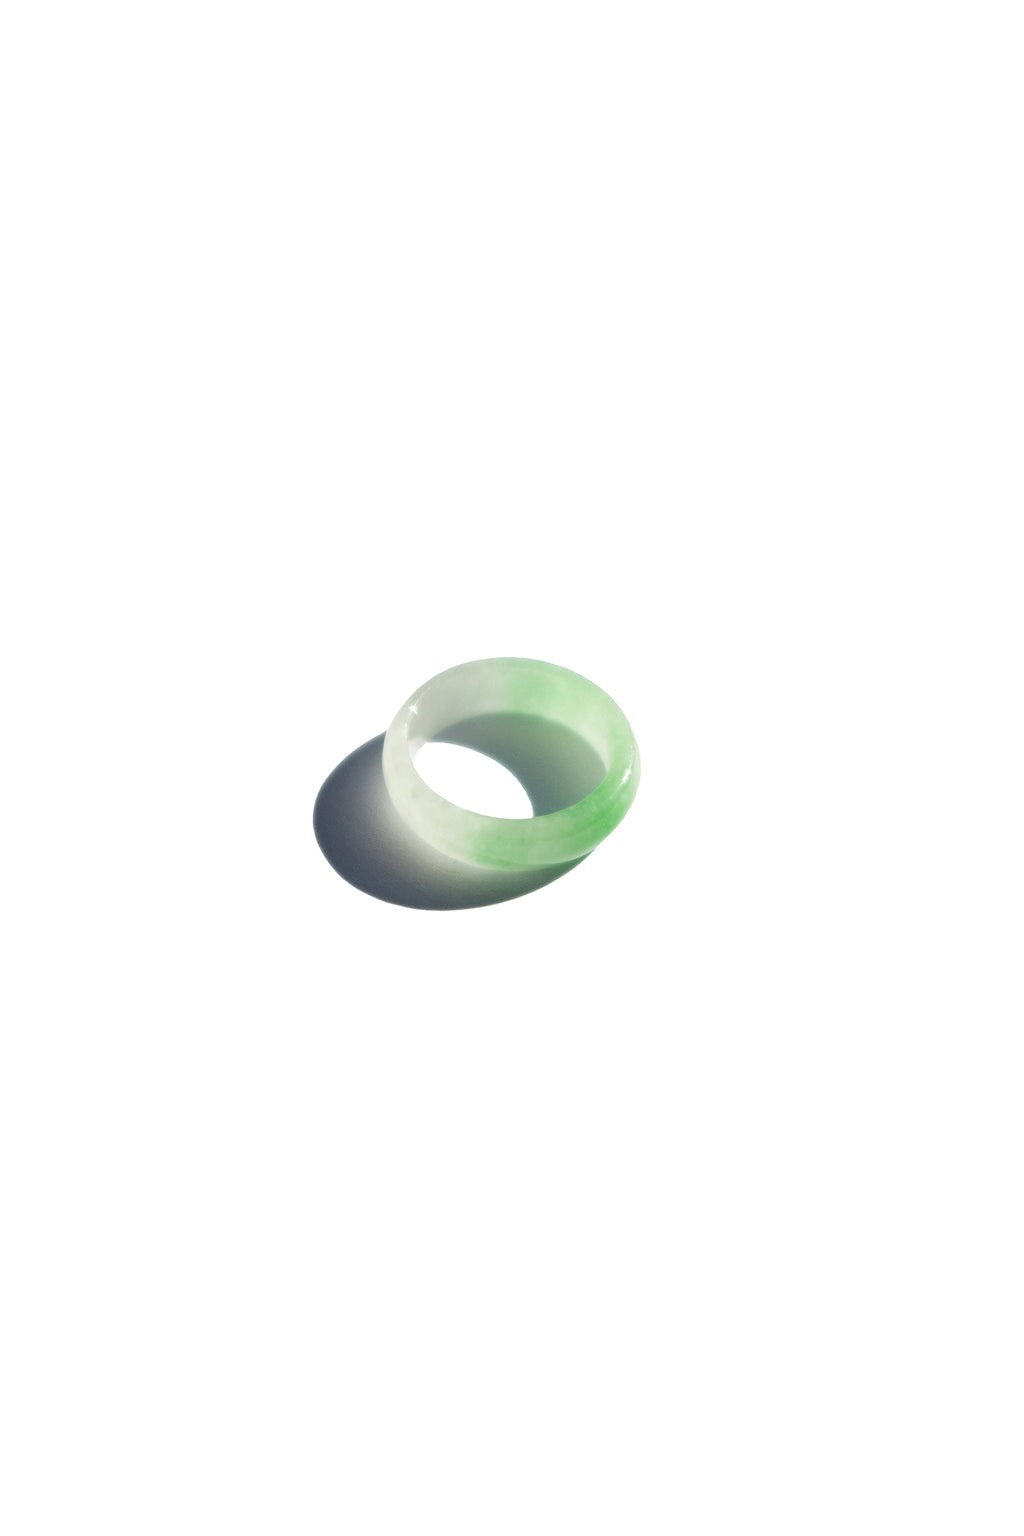    seree-koi-jadeite-ring-in-light-green-and-green-